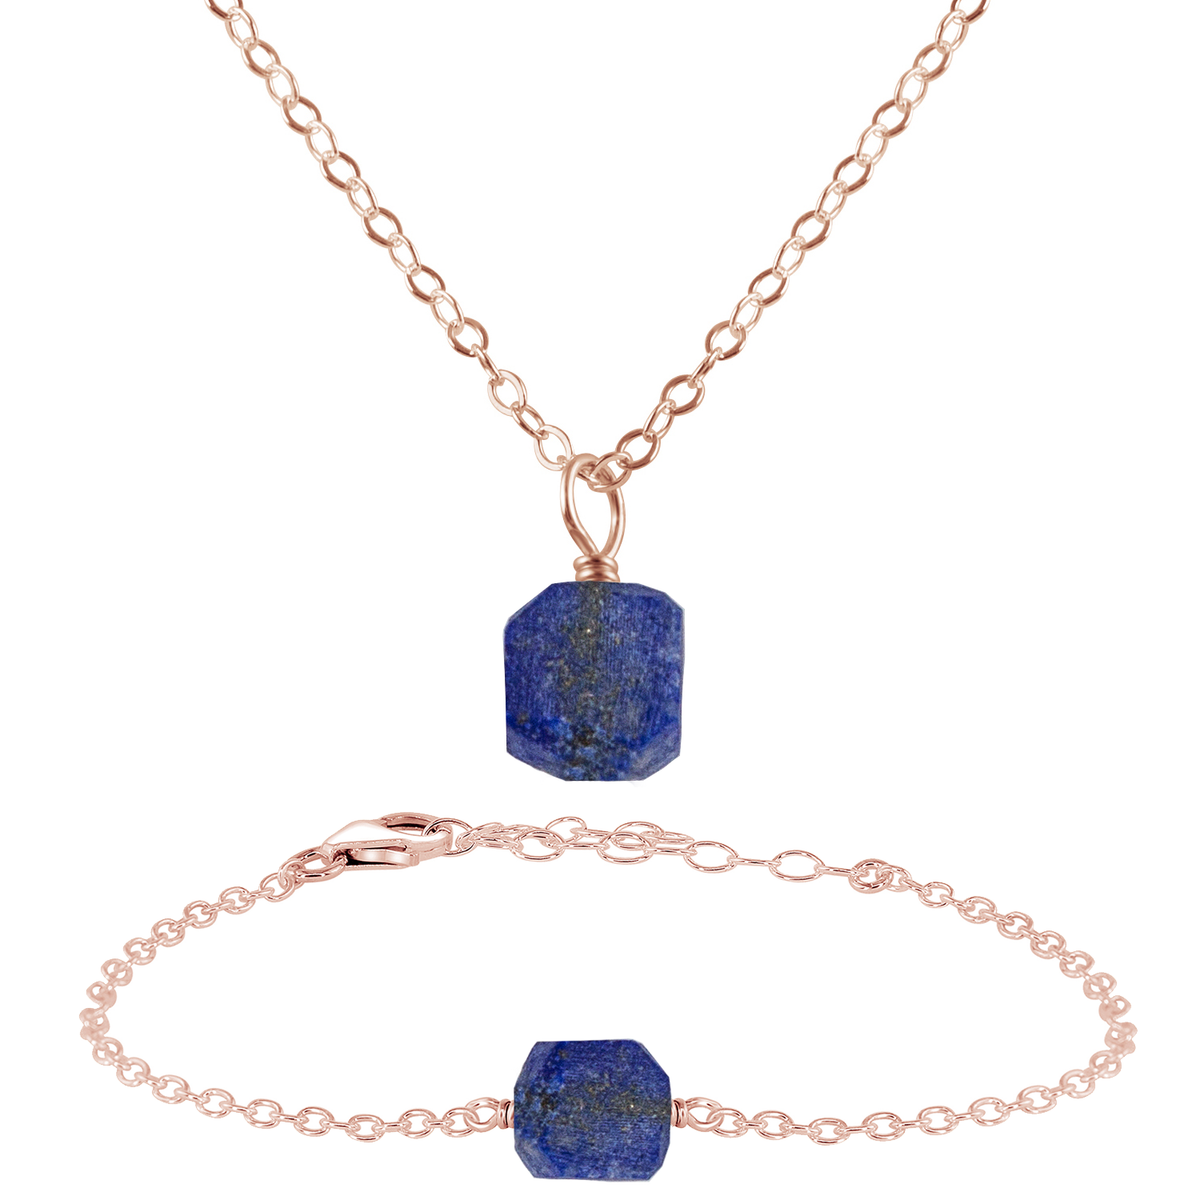 Raw Lapis Lazuli Crystal Jewellery Set - Raw Lapis Lazuli Crystal Jewellery Set - 14k Rose Gold Fill / Cable / Necklace & Bracelet - Luna Tide Handmade Crystal Jewellery